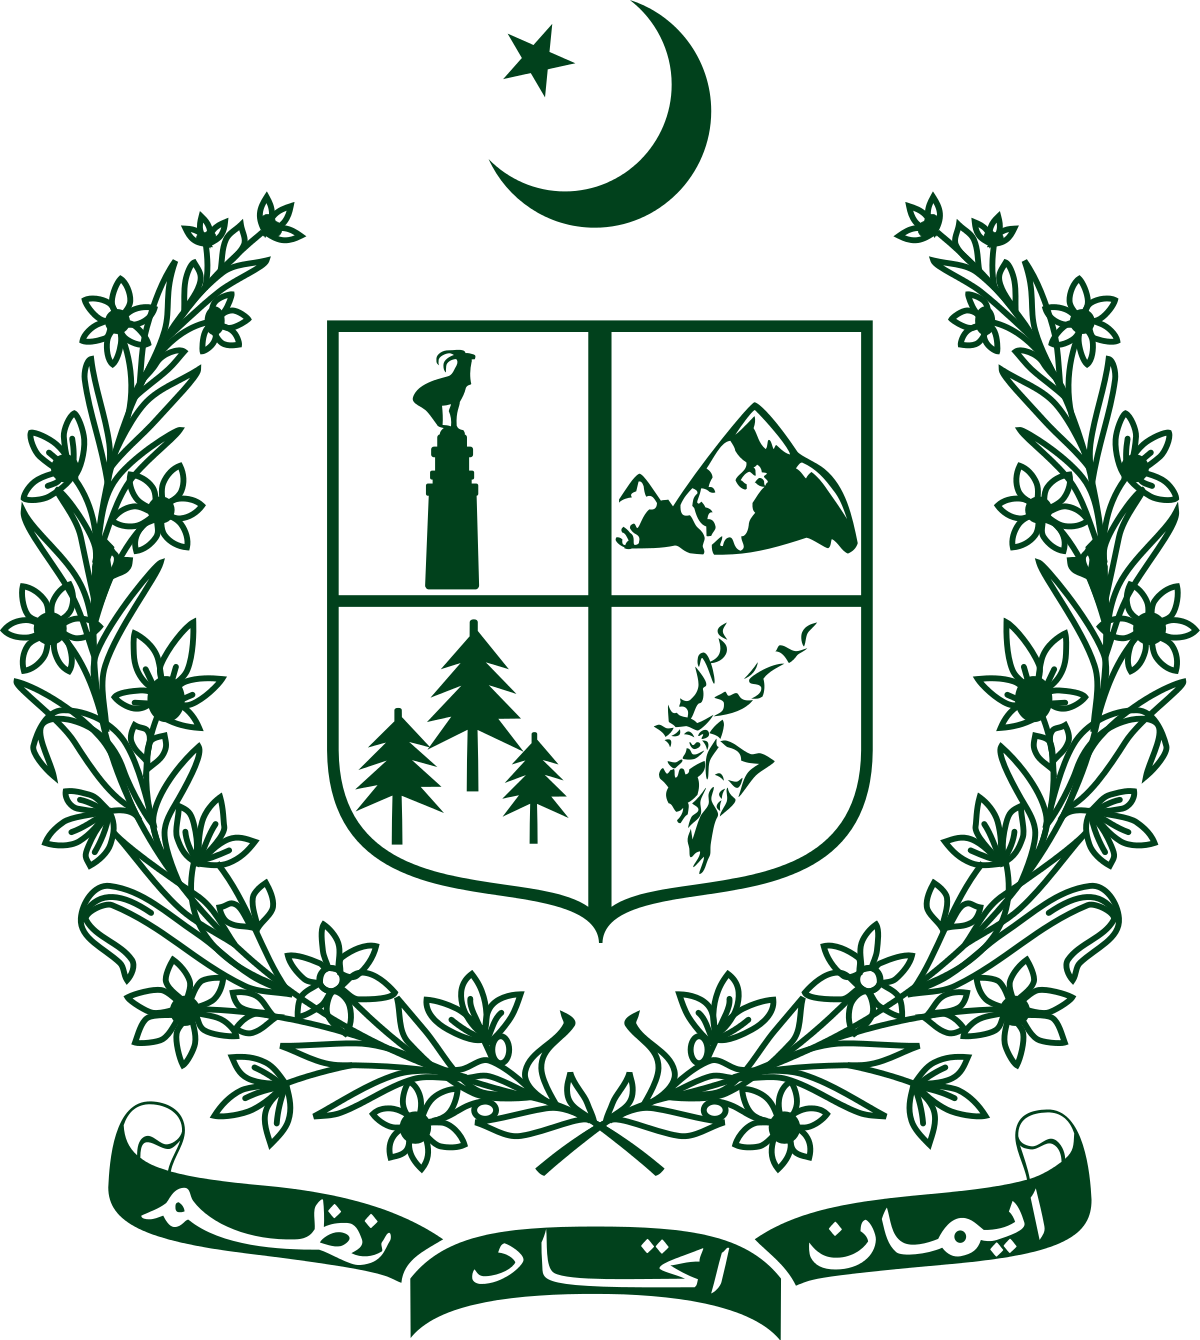 Government of Gilgit Baltistan, Pakistan